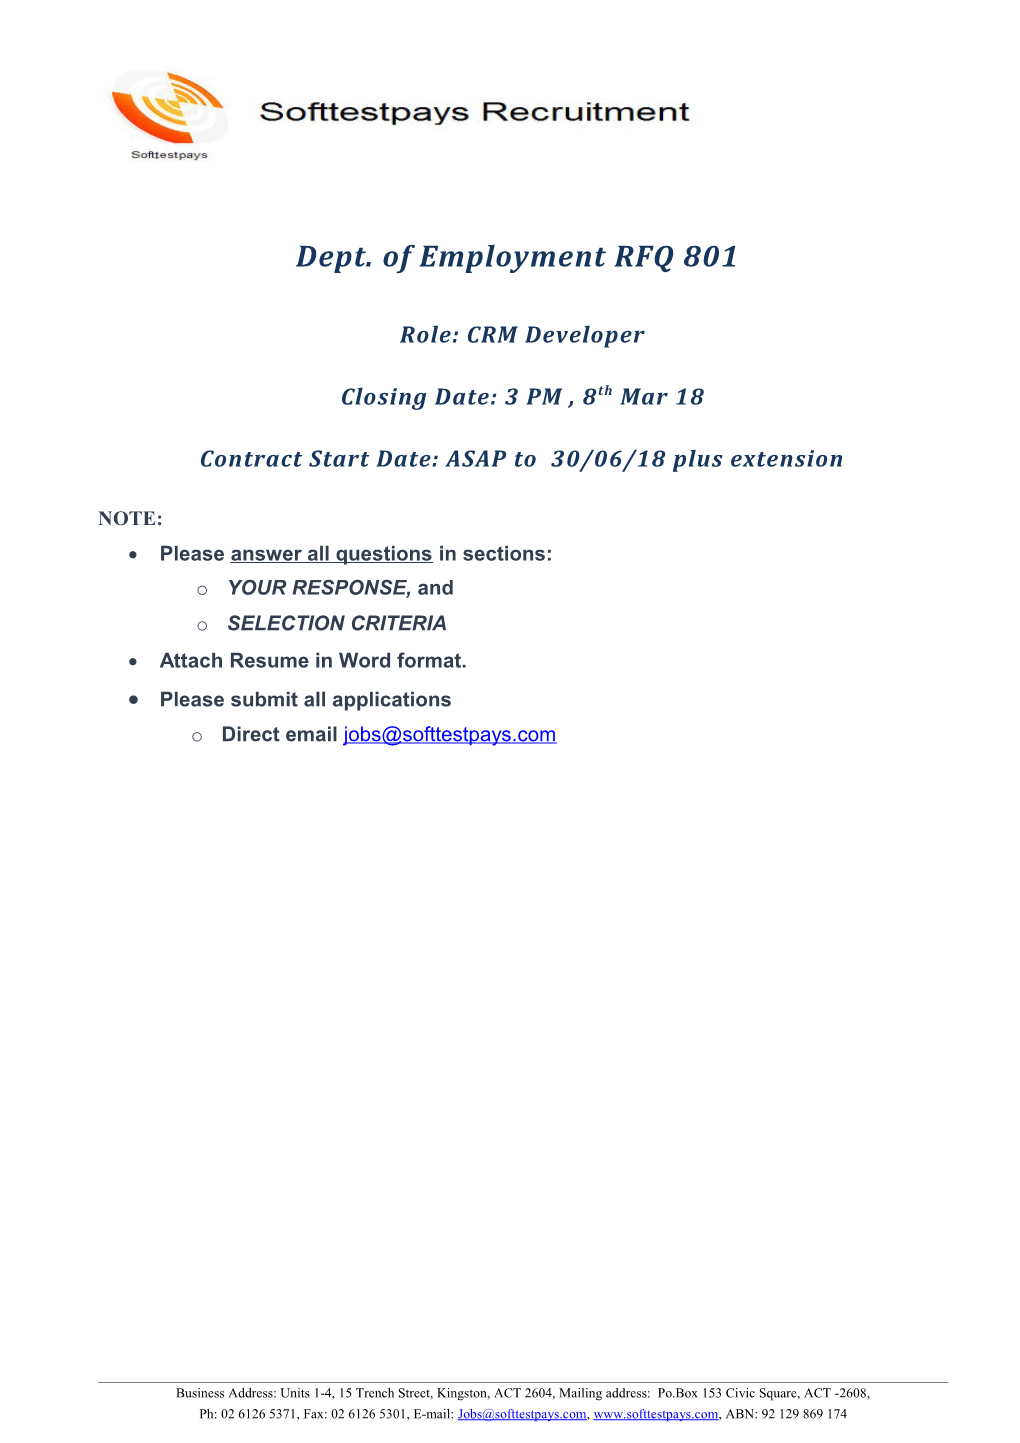 Dept. of Employment RFQ801